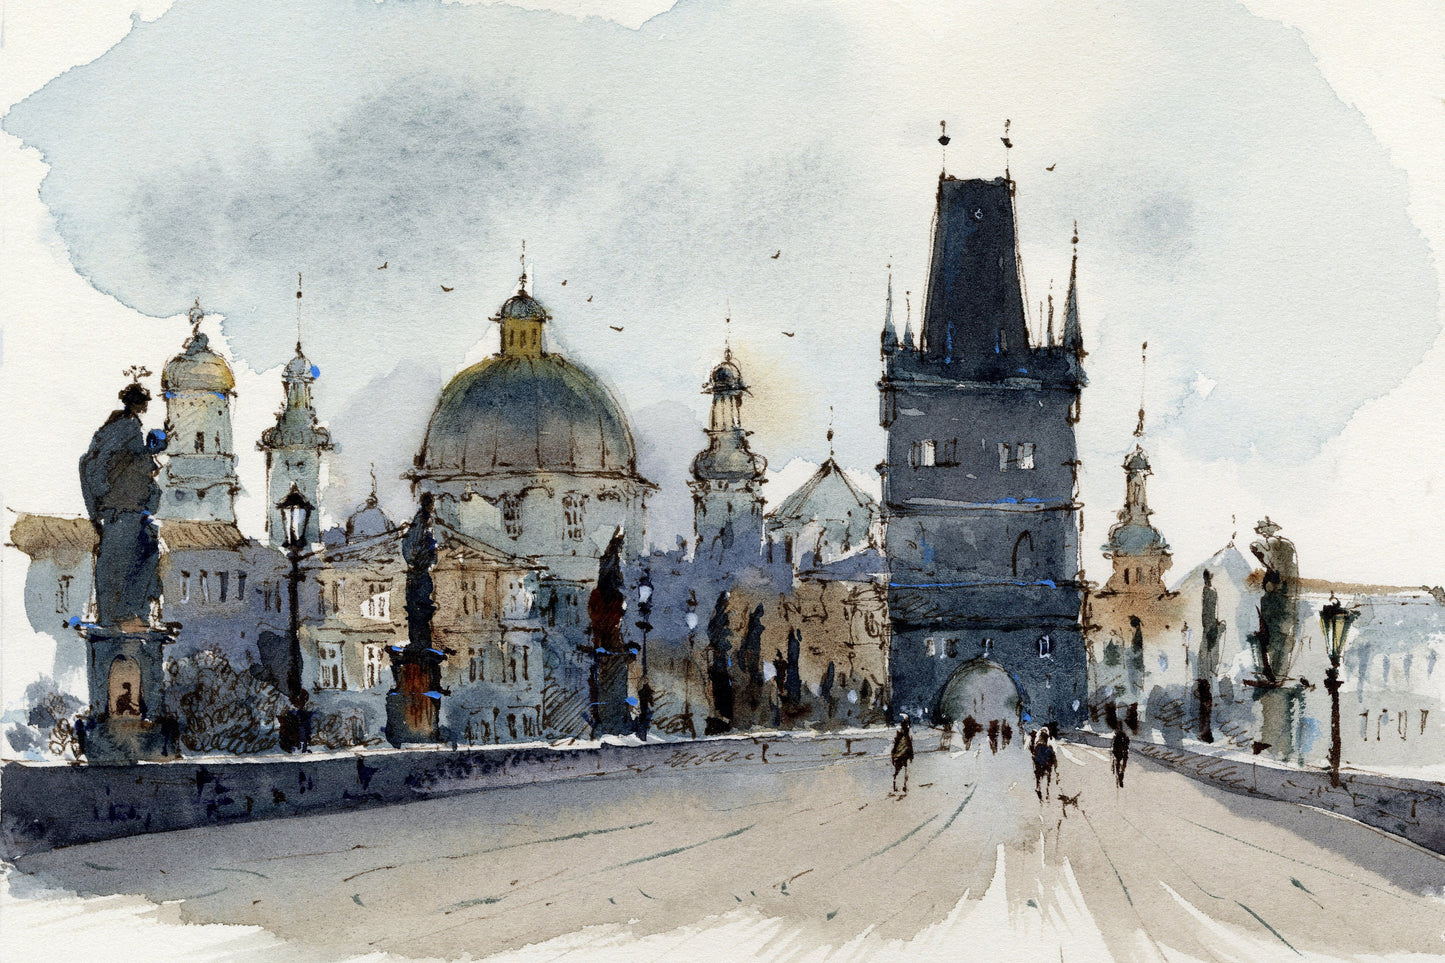 Prague Art Print, Czech Wall Art, Charles Bridge, Travel Poster, Gift Idea, Watercolor Painting, Europa Architecture